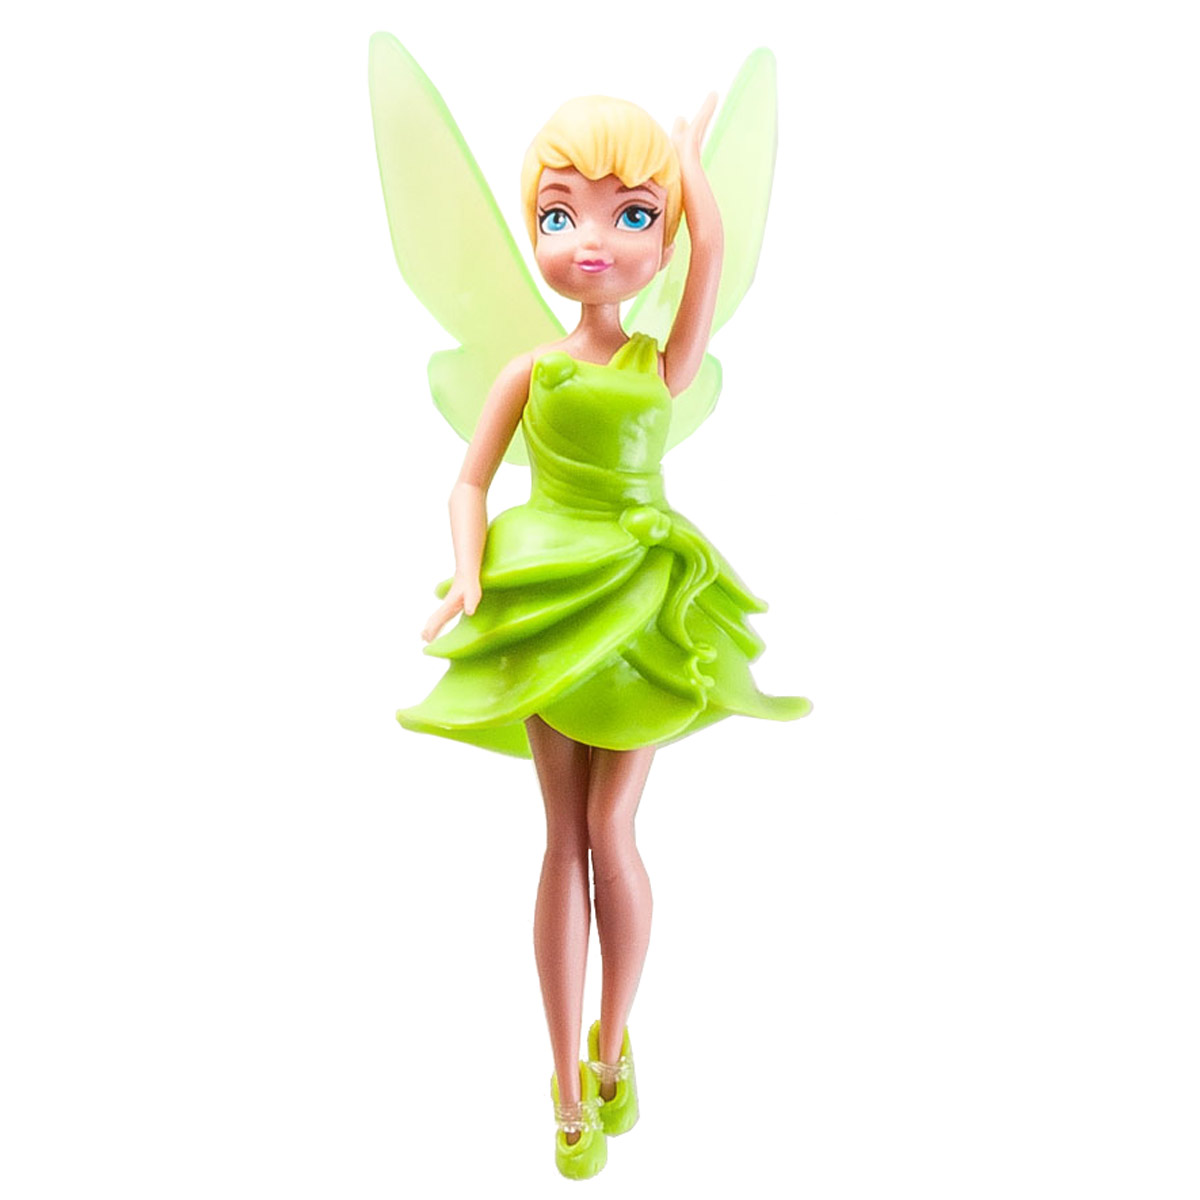 Disney Fairies - Tinker Bell - Disney Fairies663210 Disney Fairies Tinker Bell       .      -.       .       .   -   . ,     .       ,        .         ,        .      !